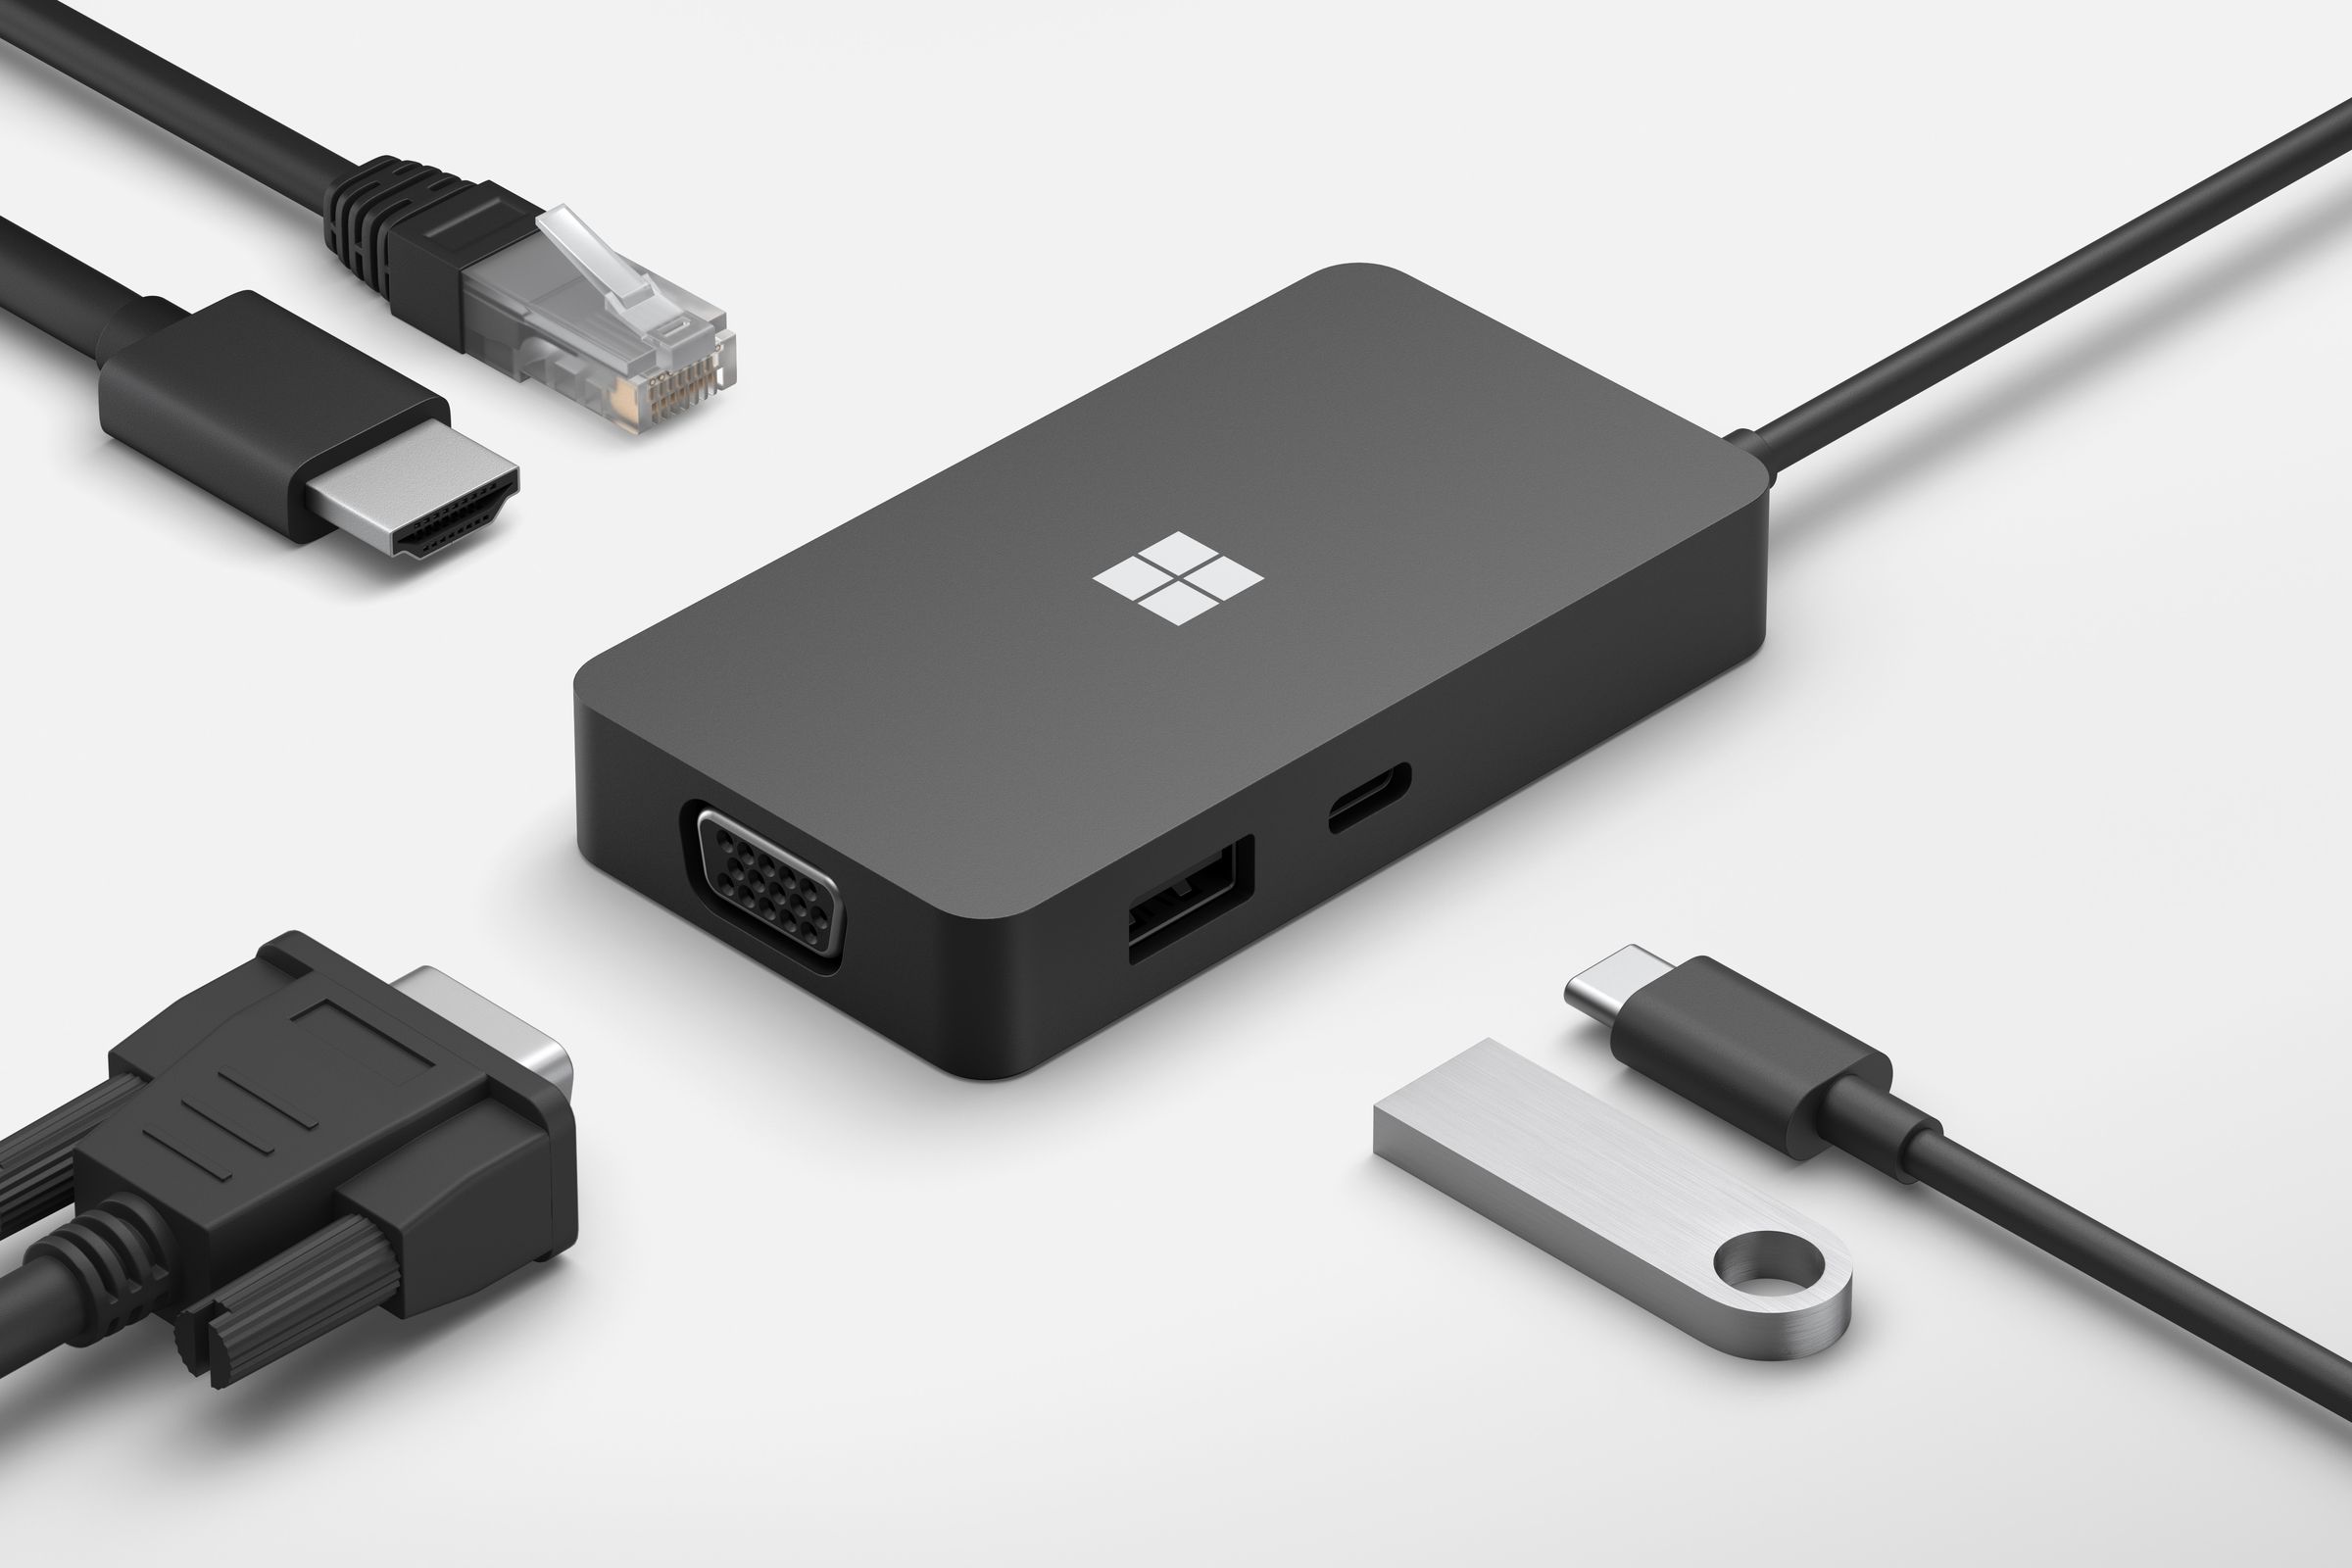 Microsoft’s new USB-C travel hub.